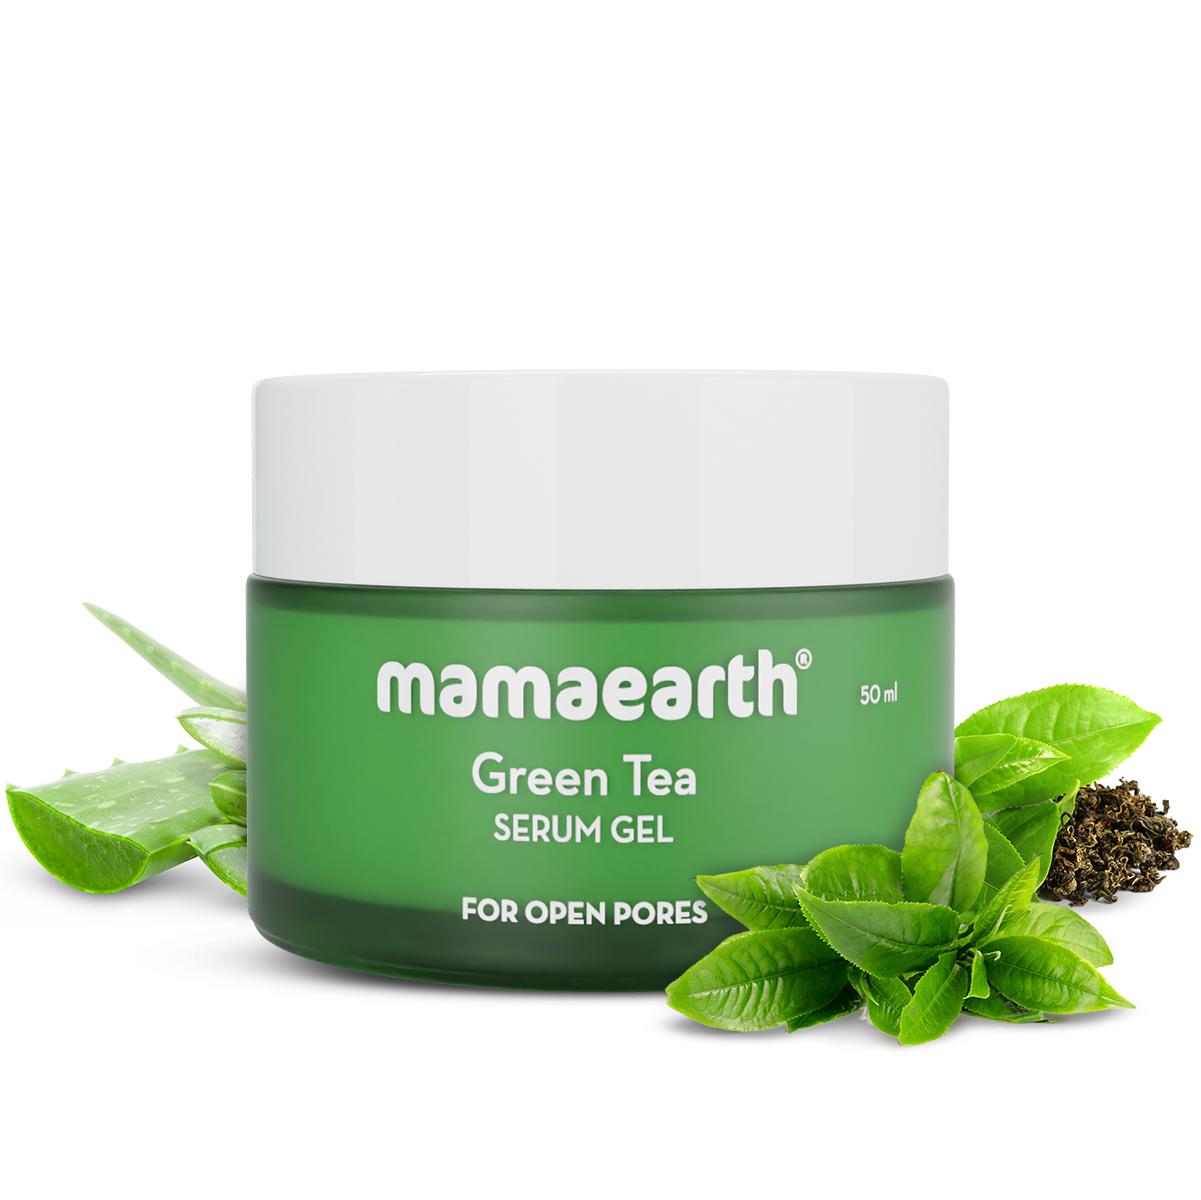 green tea serum gel with green tea & collagen for open pores - 50 ml